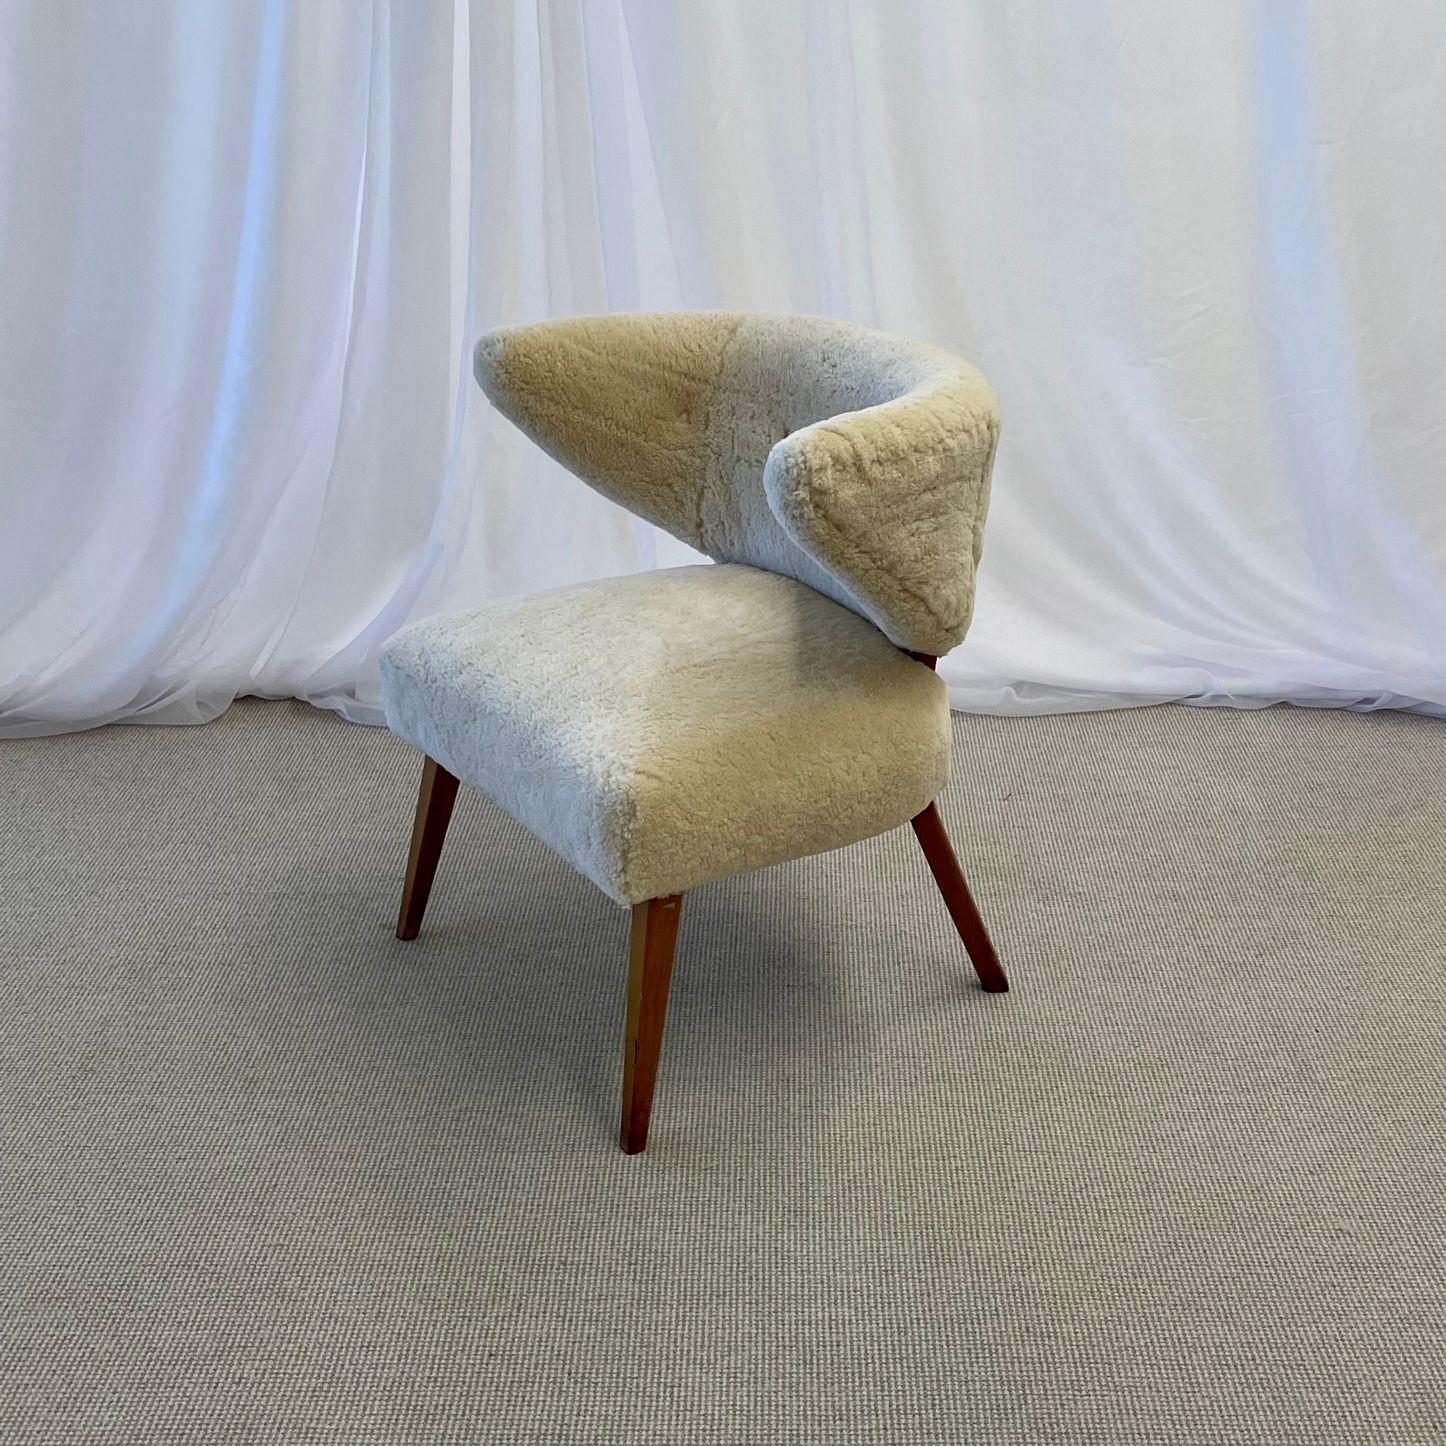 Mid-Century Modern wing / slipper chair, Otto Schultz style, newly upholstered Sheepskin
 
Beautiful sheepskin lounge chair in a cozy genuine beige sheepskin upholstery. Similar in form to works by Scandinavian designer Otto Schultz.
 
Beige